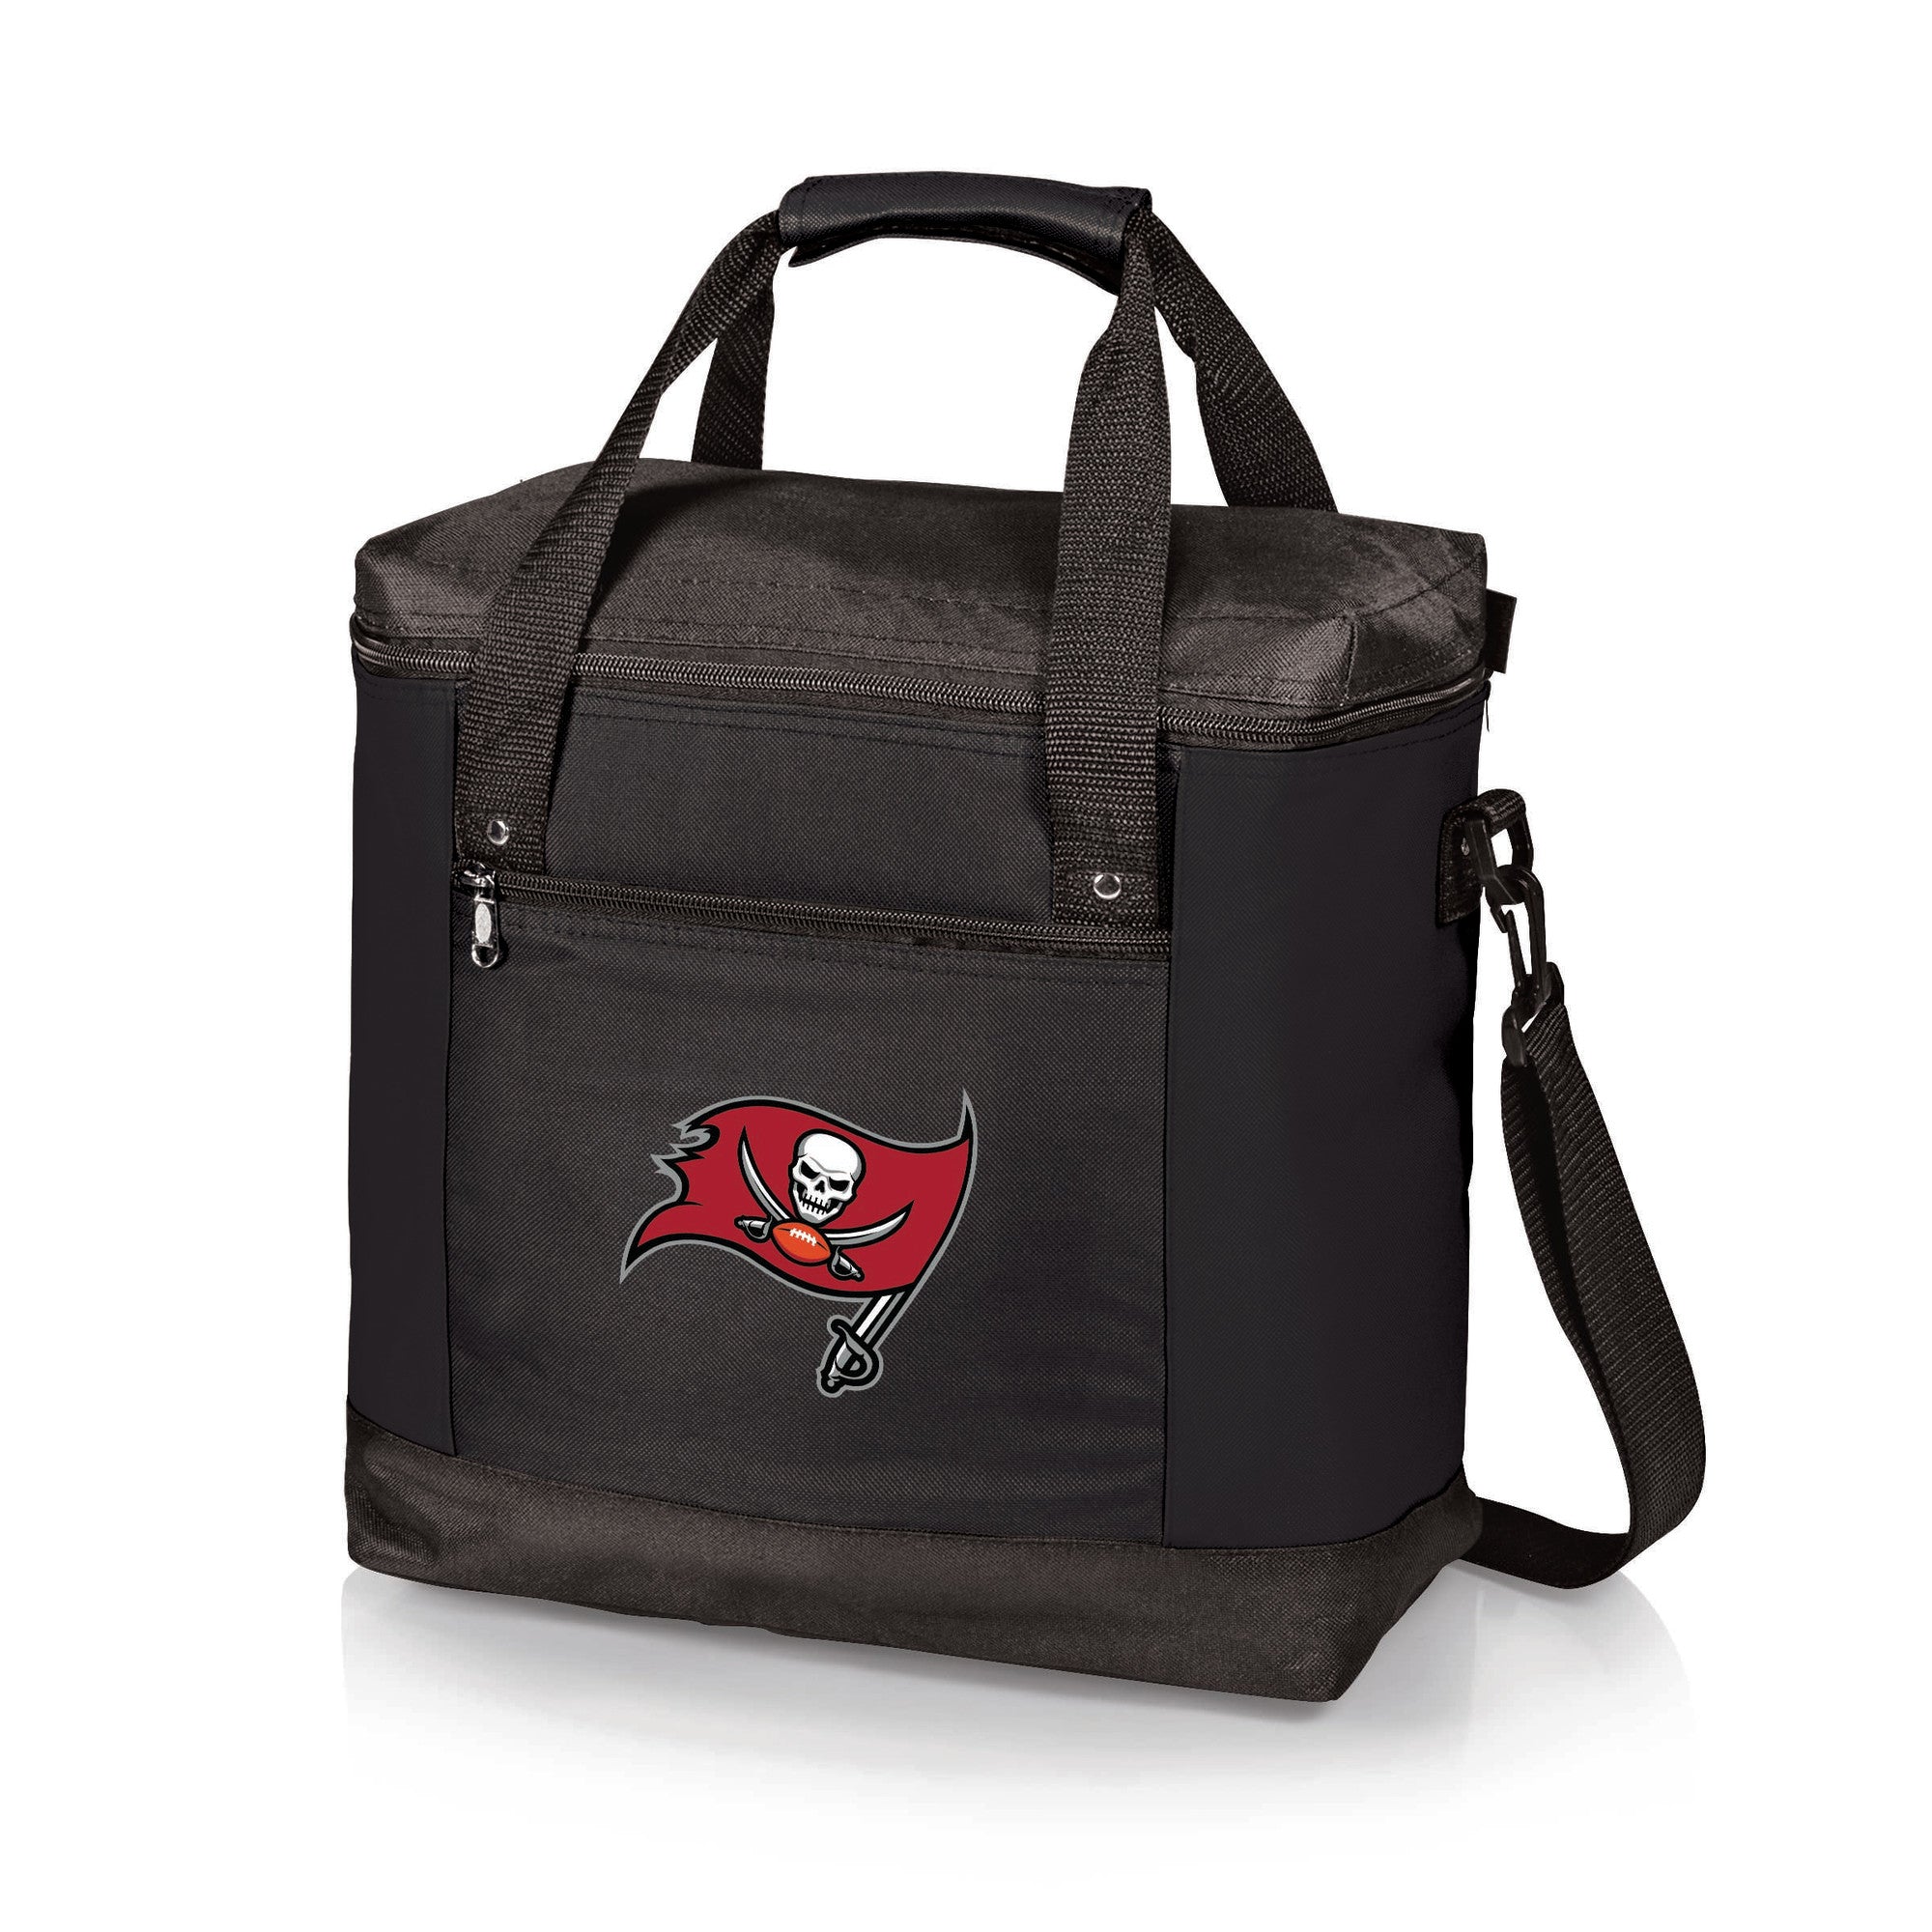 Tampa Bay Buccaneers - Montero Cooler Tote Bag